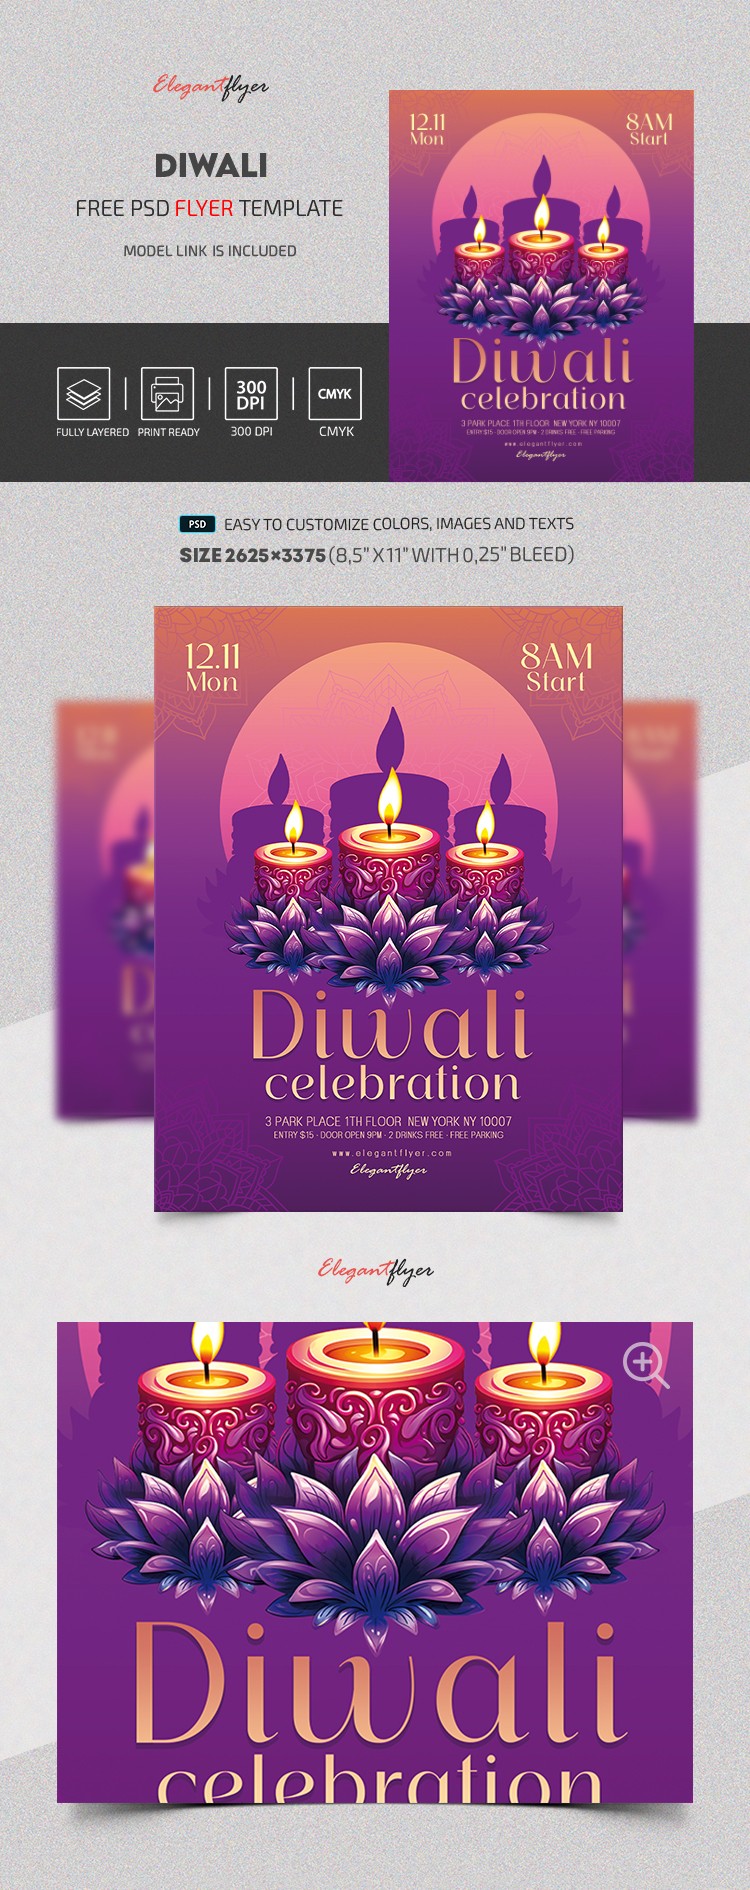 Celebrazione di Diwali by ElegantFlyer